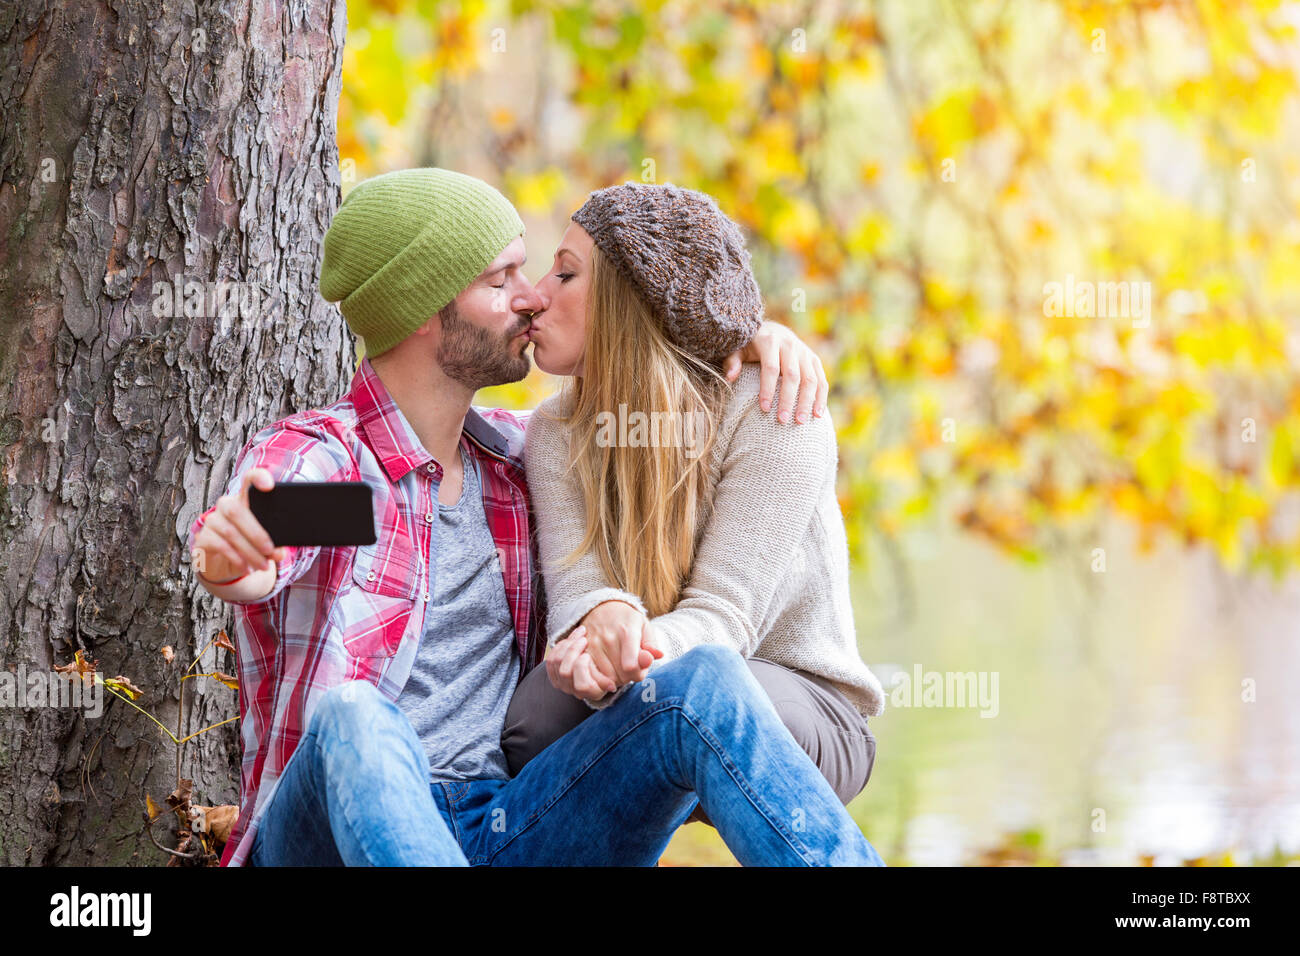 Coppia giovane dating in foresta Foto Stock